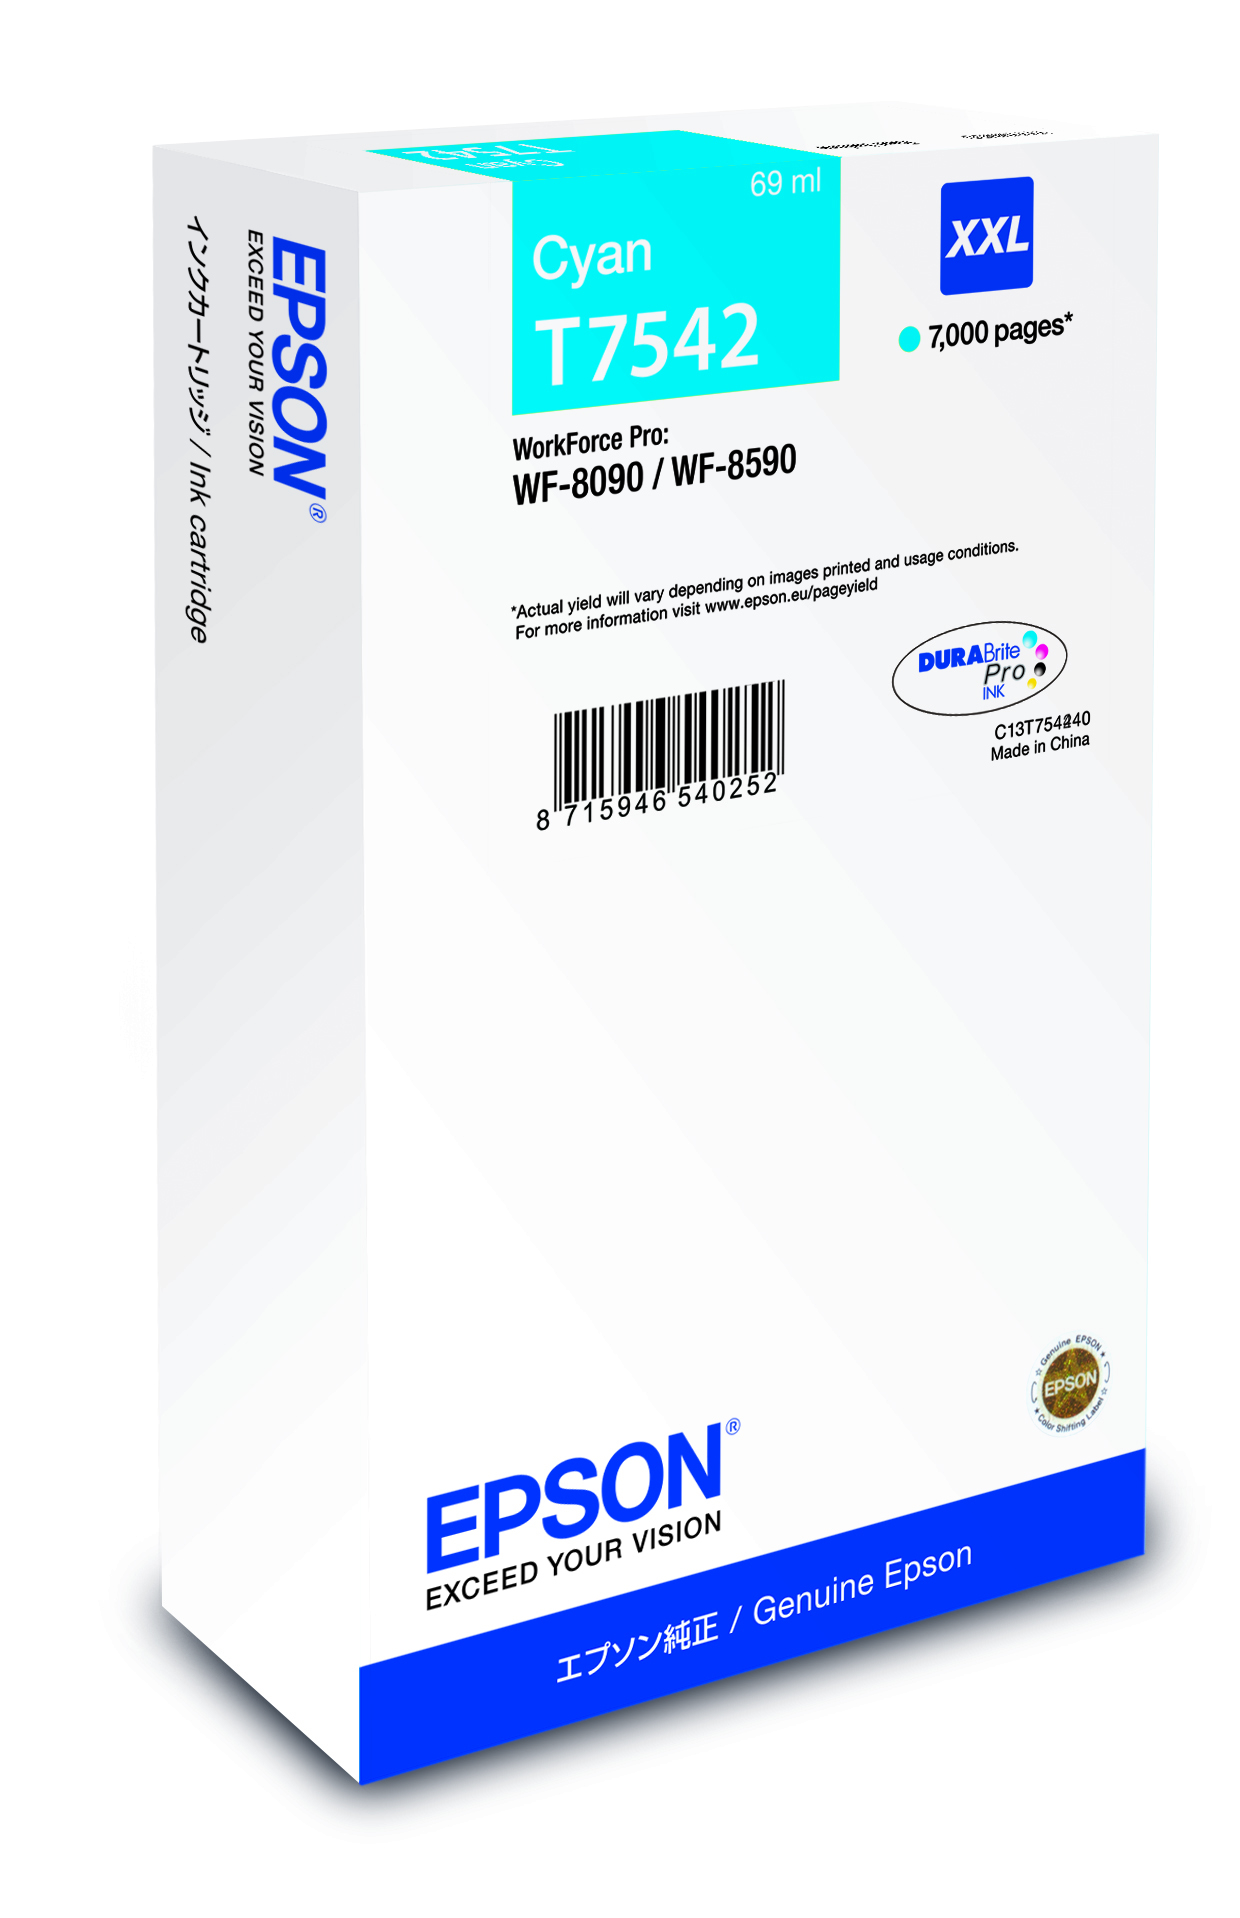 Epson WF-8090 / WF-8590 Ink Cartridge XXL Cyan single pack / cyaan